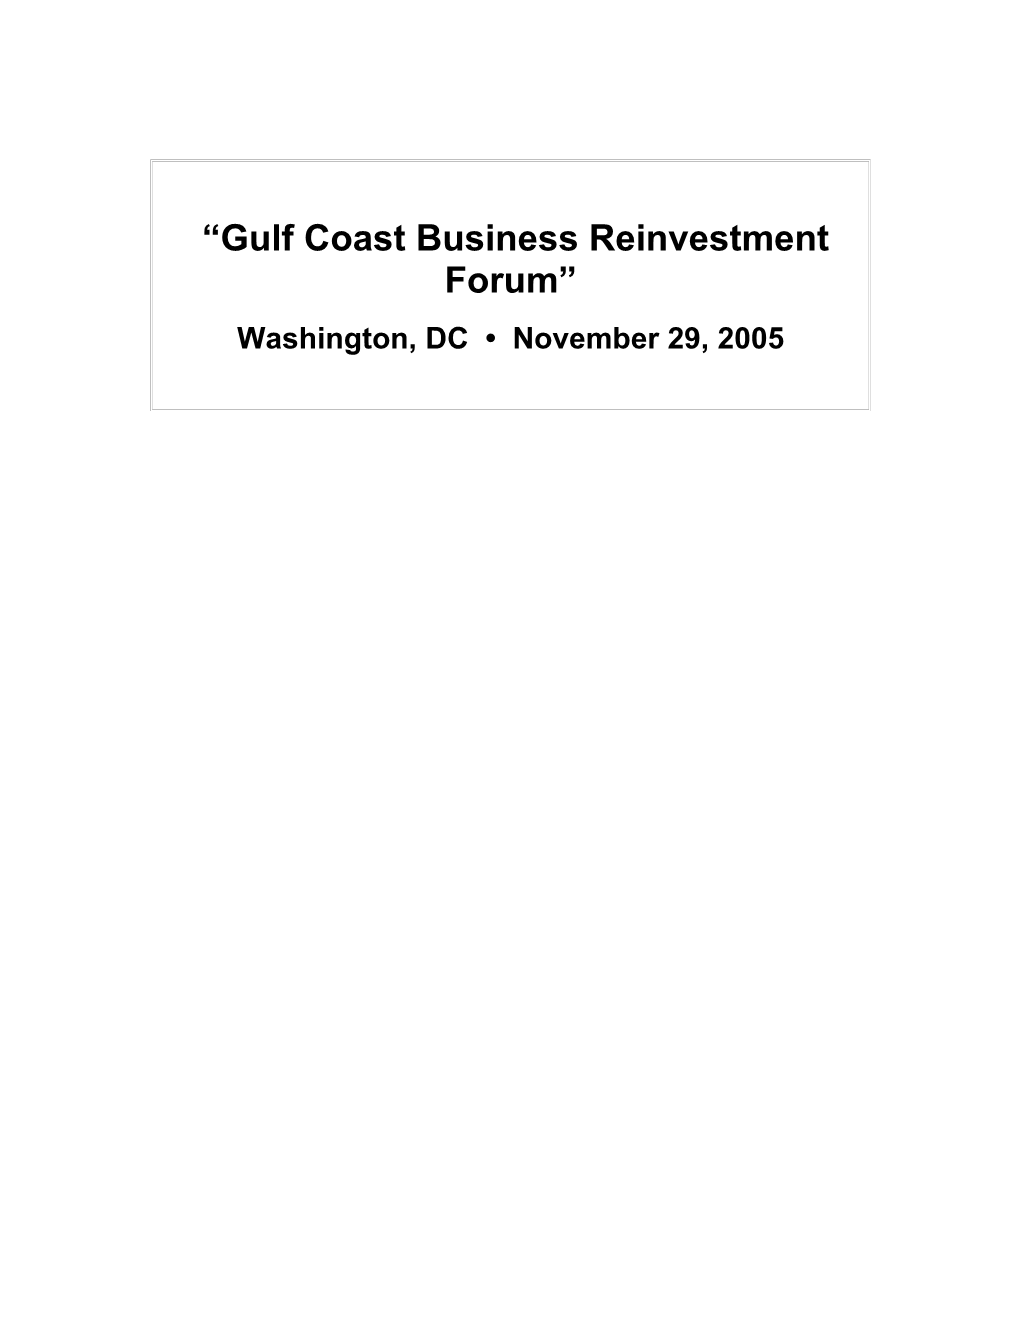 Gulfcoast Business Reinvestment Forum